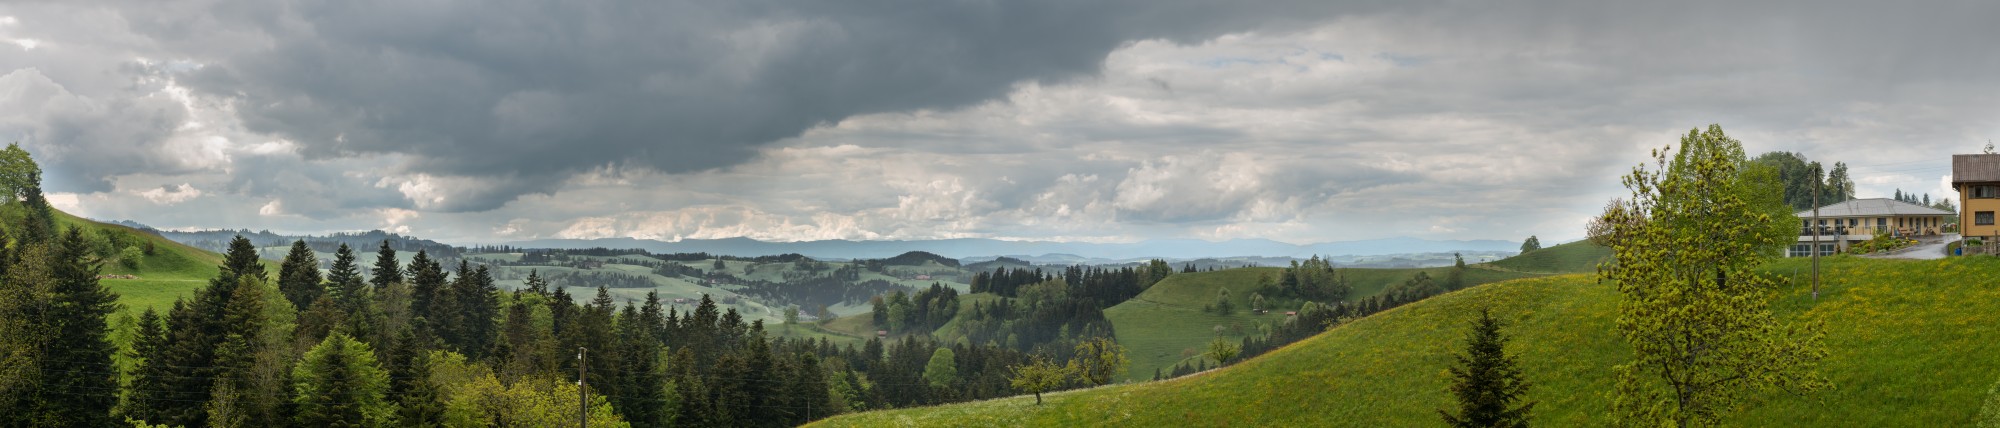 Landscape Panorama at Hergiswil near Willisau - Lucerne - Switzerland - 01